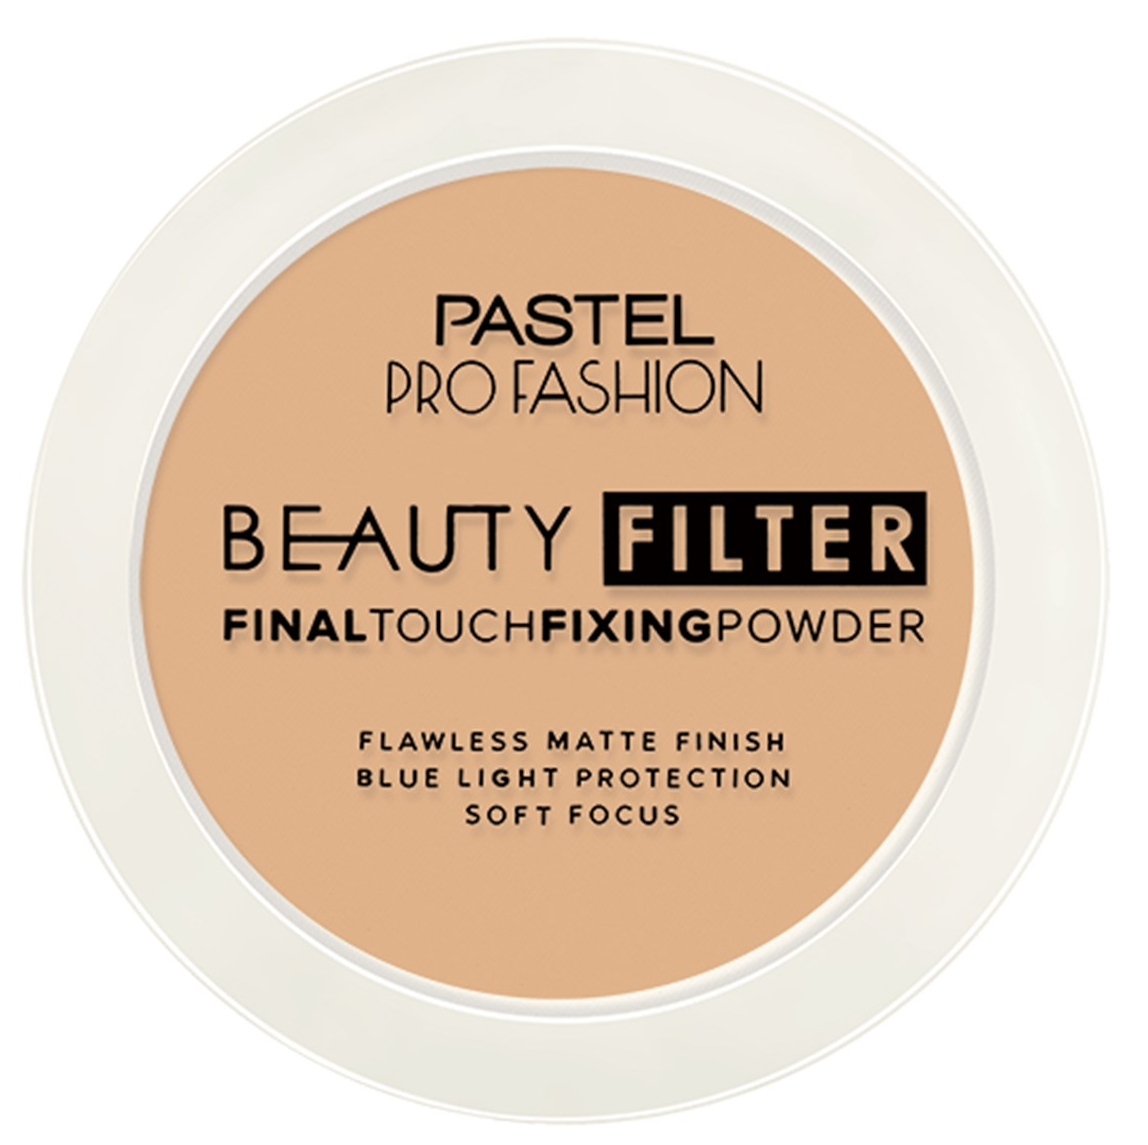 Пудра для лица Pastel Beauty Filter Fixing Powder тон 01 11 г